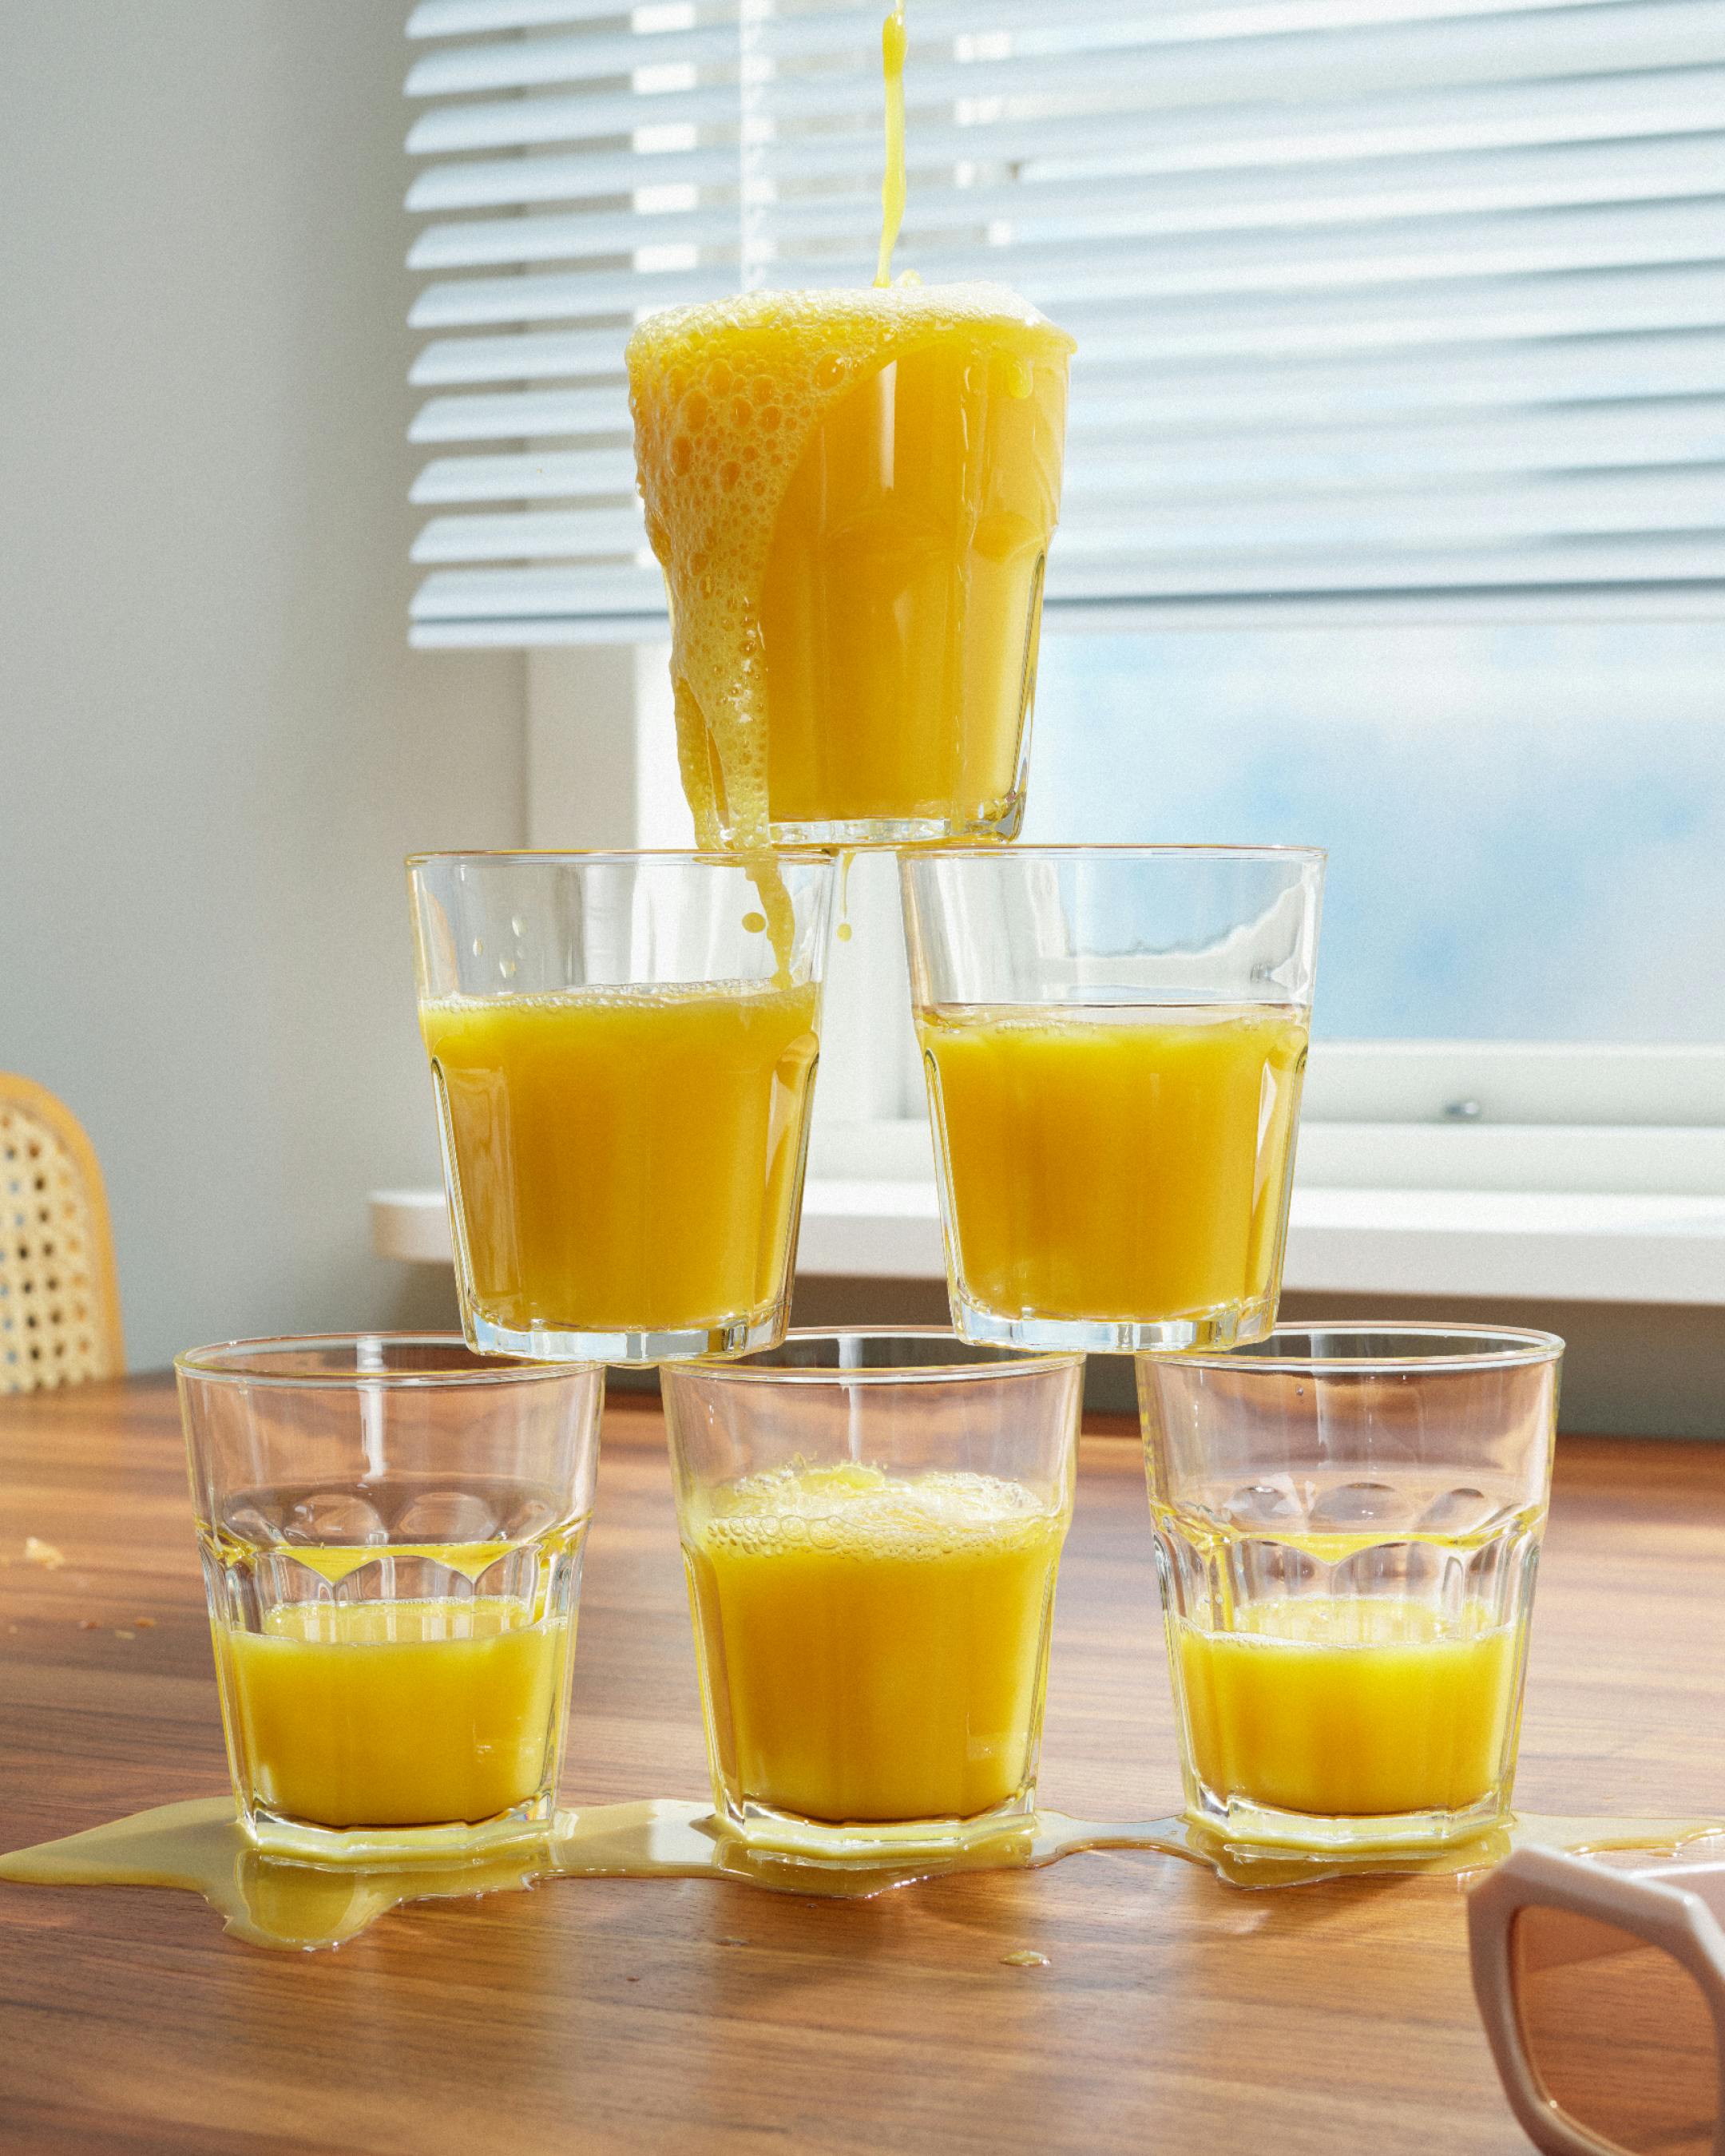 A still life of orange juice glasses